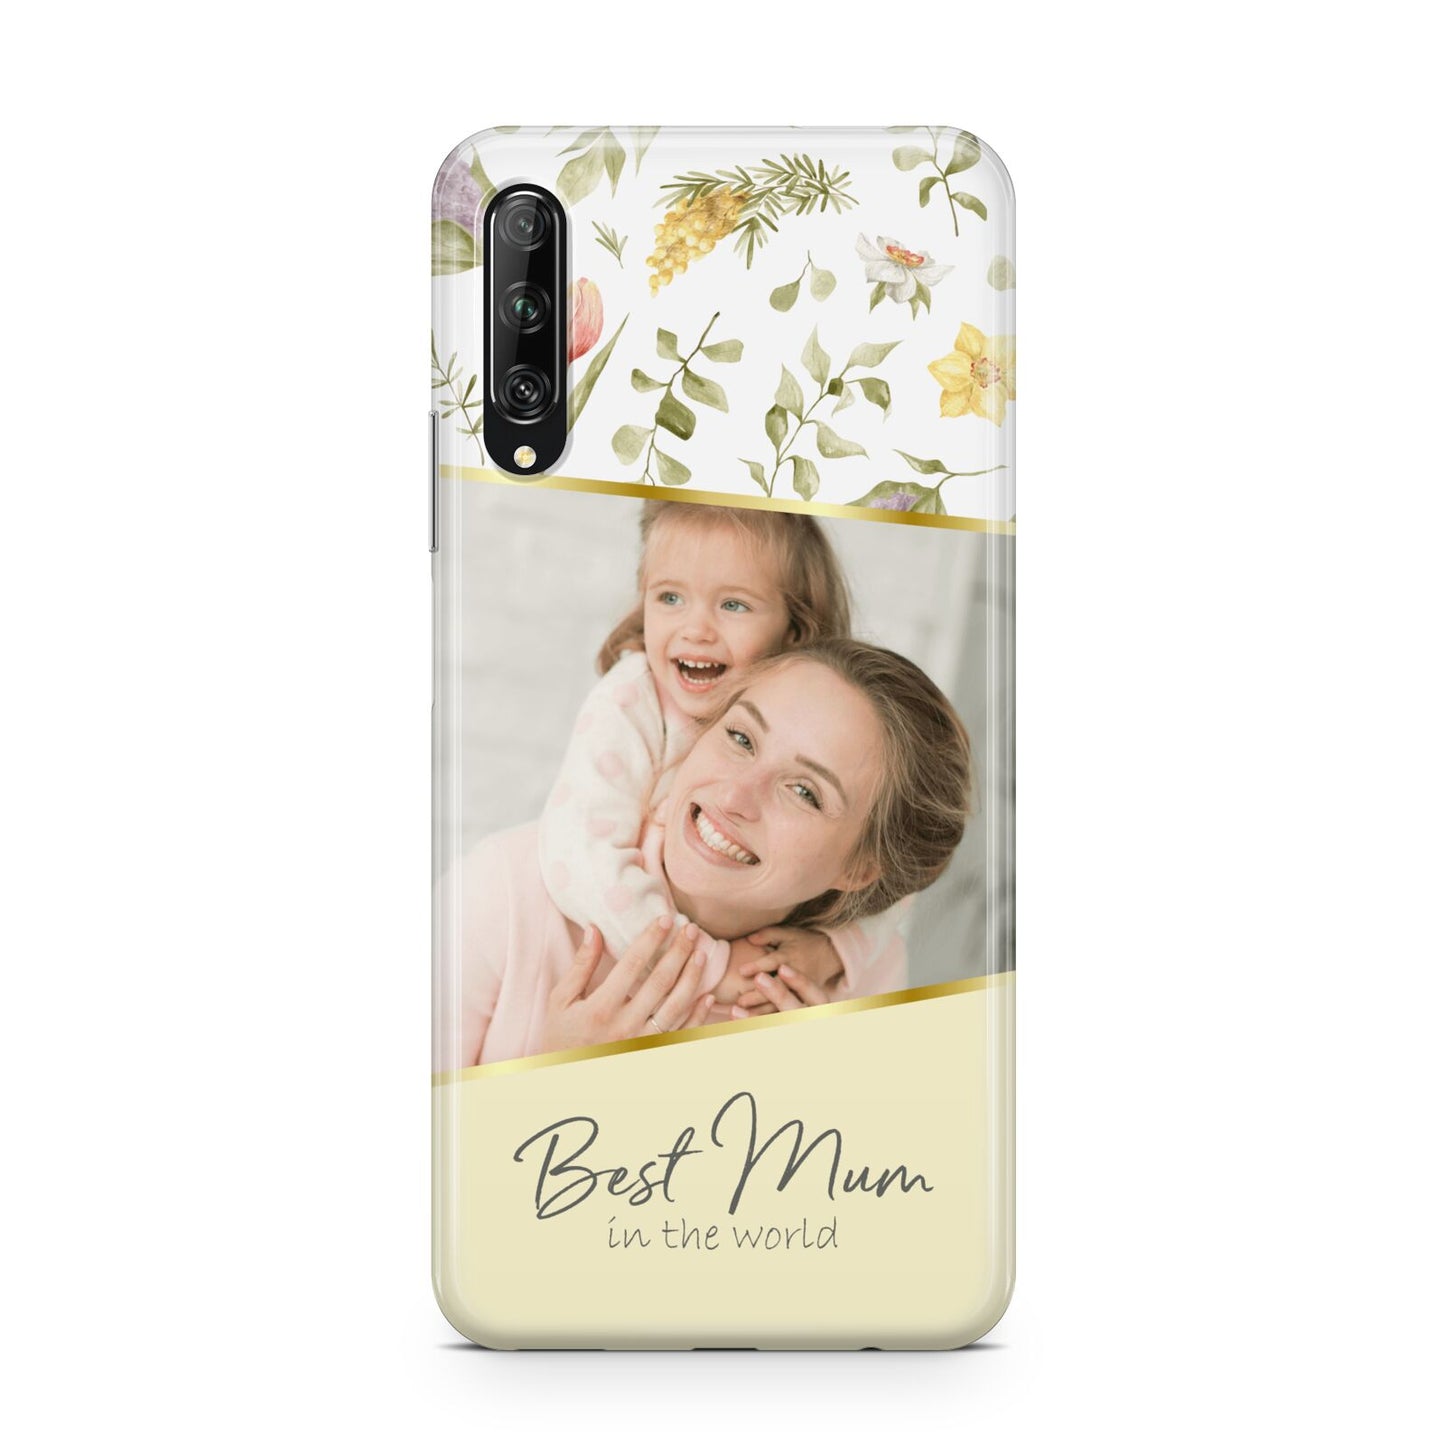 Personalised Best Mum Huawei P Smart Pro 2019